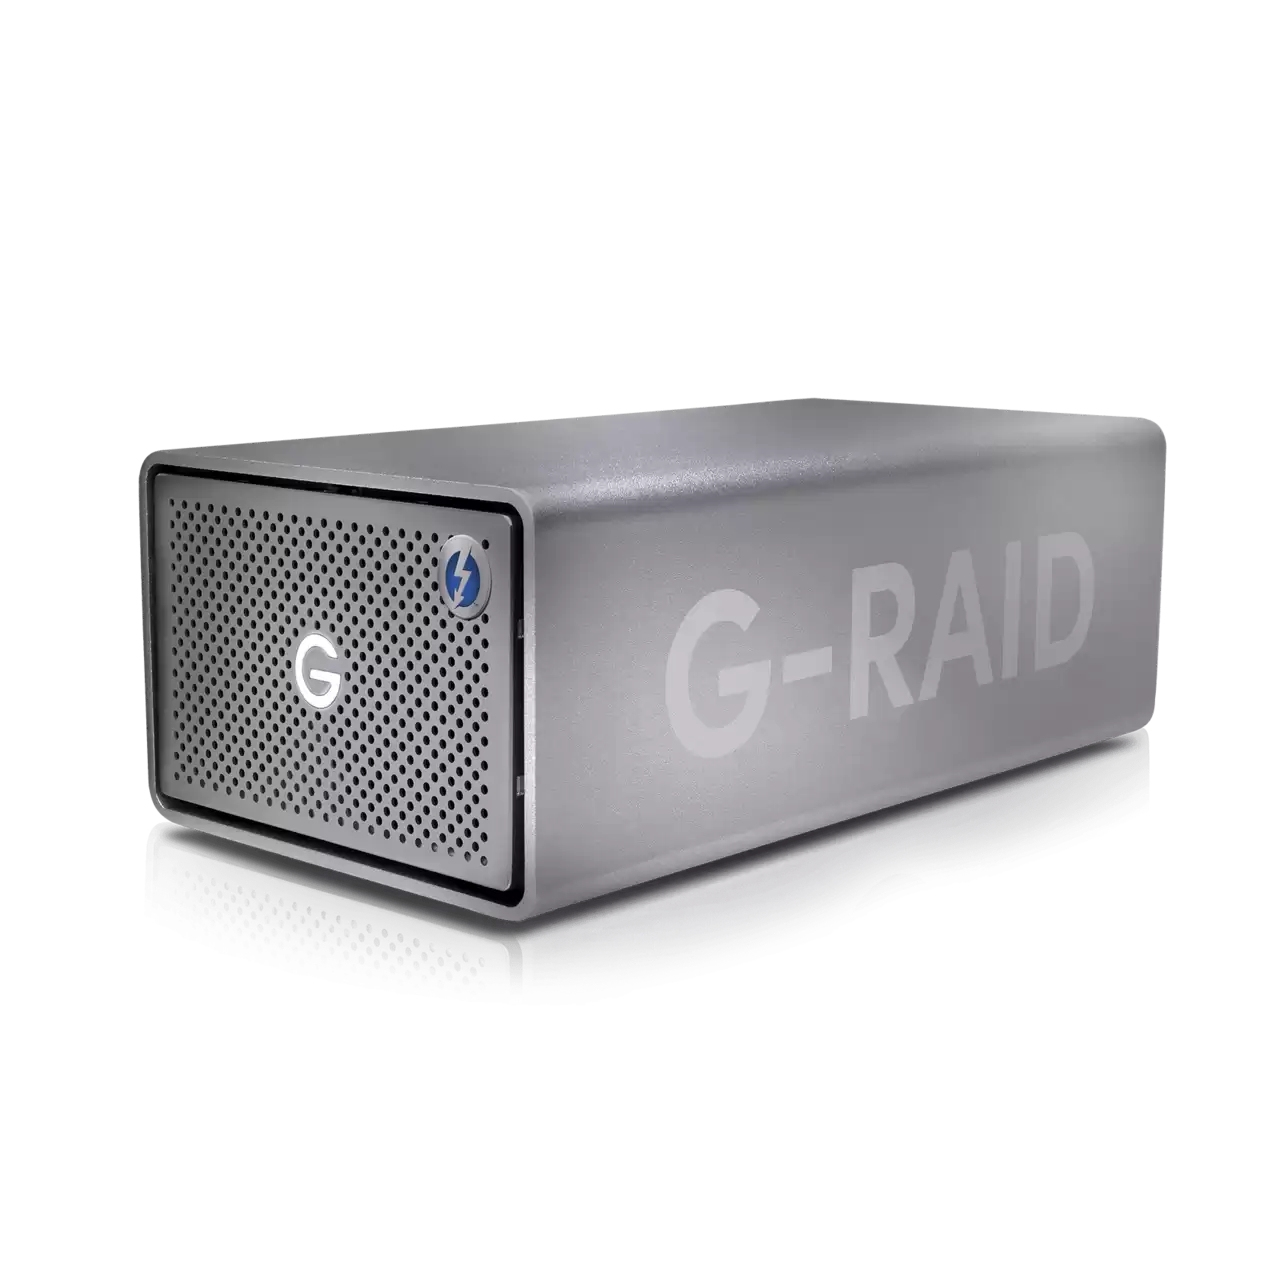  Professional G-RAID 2 8TB 3.5inch Thunderbolt 3 7200RPM USB-C HDMI Port Enterprise-Class 2-Bay Desktop Drive - Space Grey